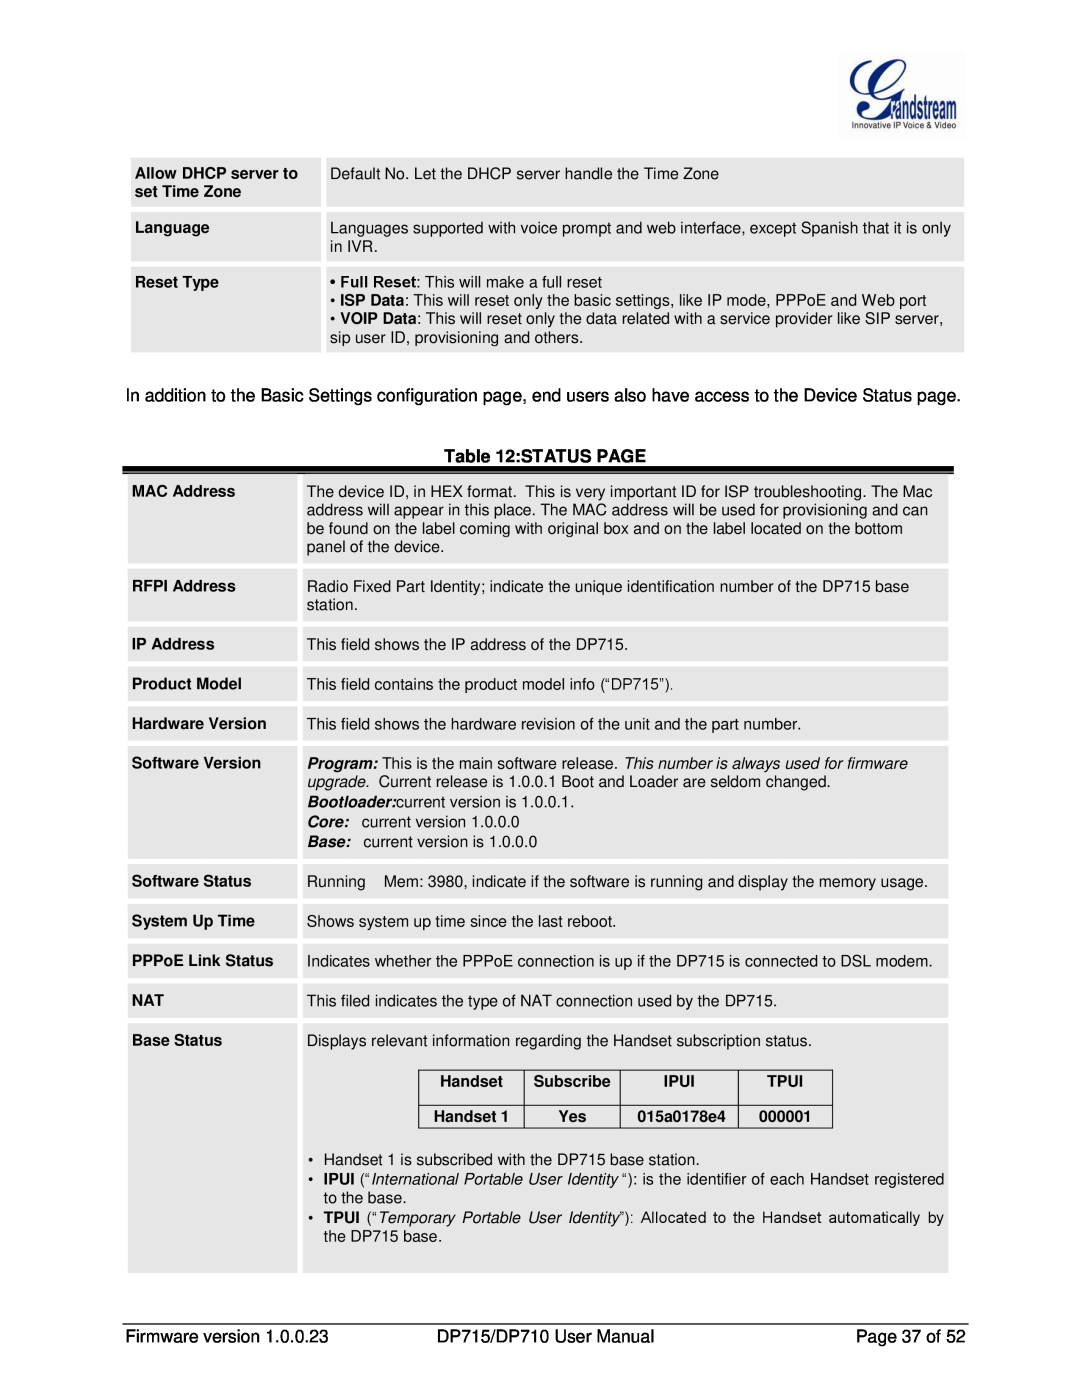 Grandstream Networks DP710 manual Status Page 